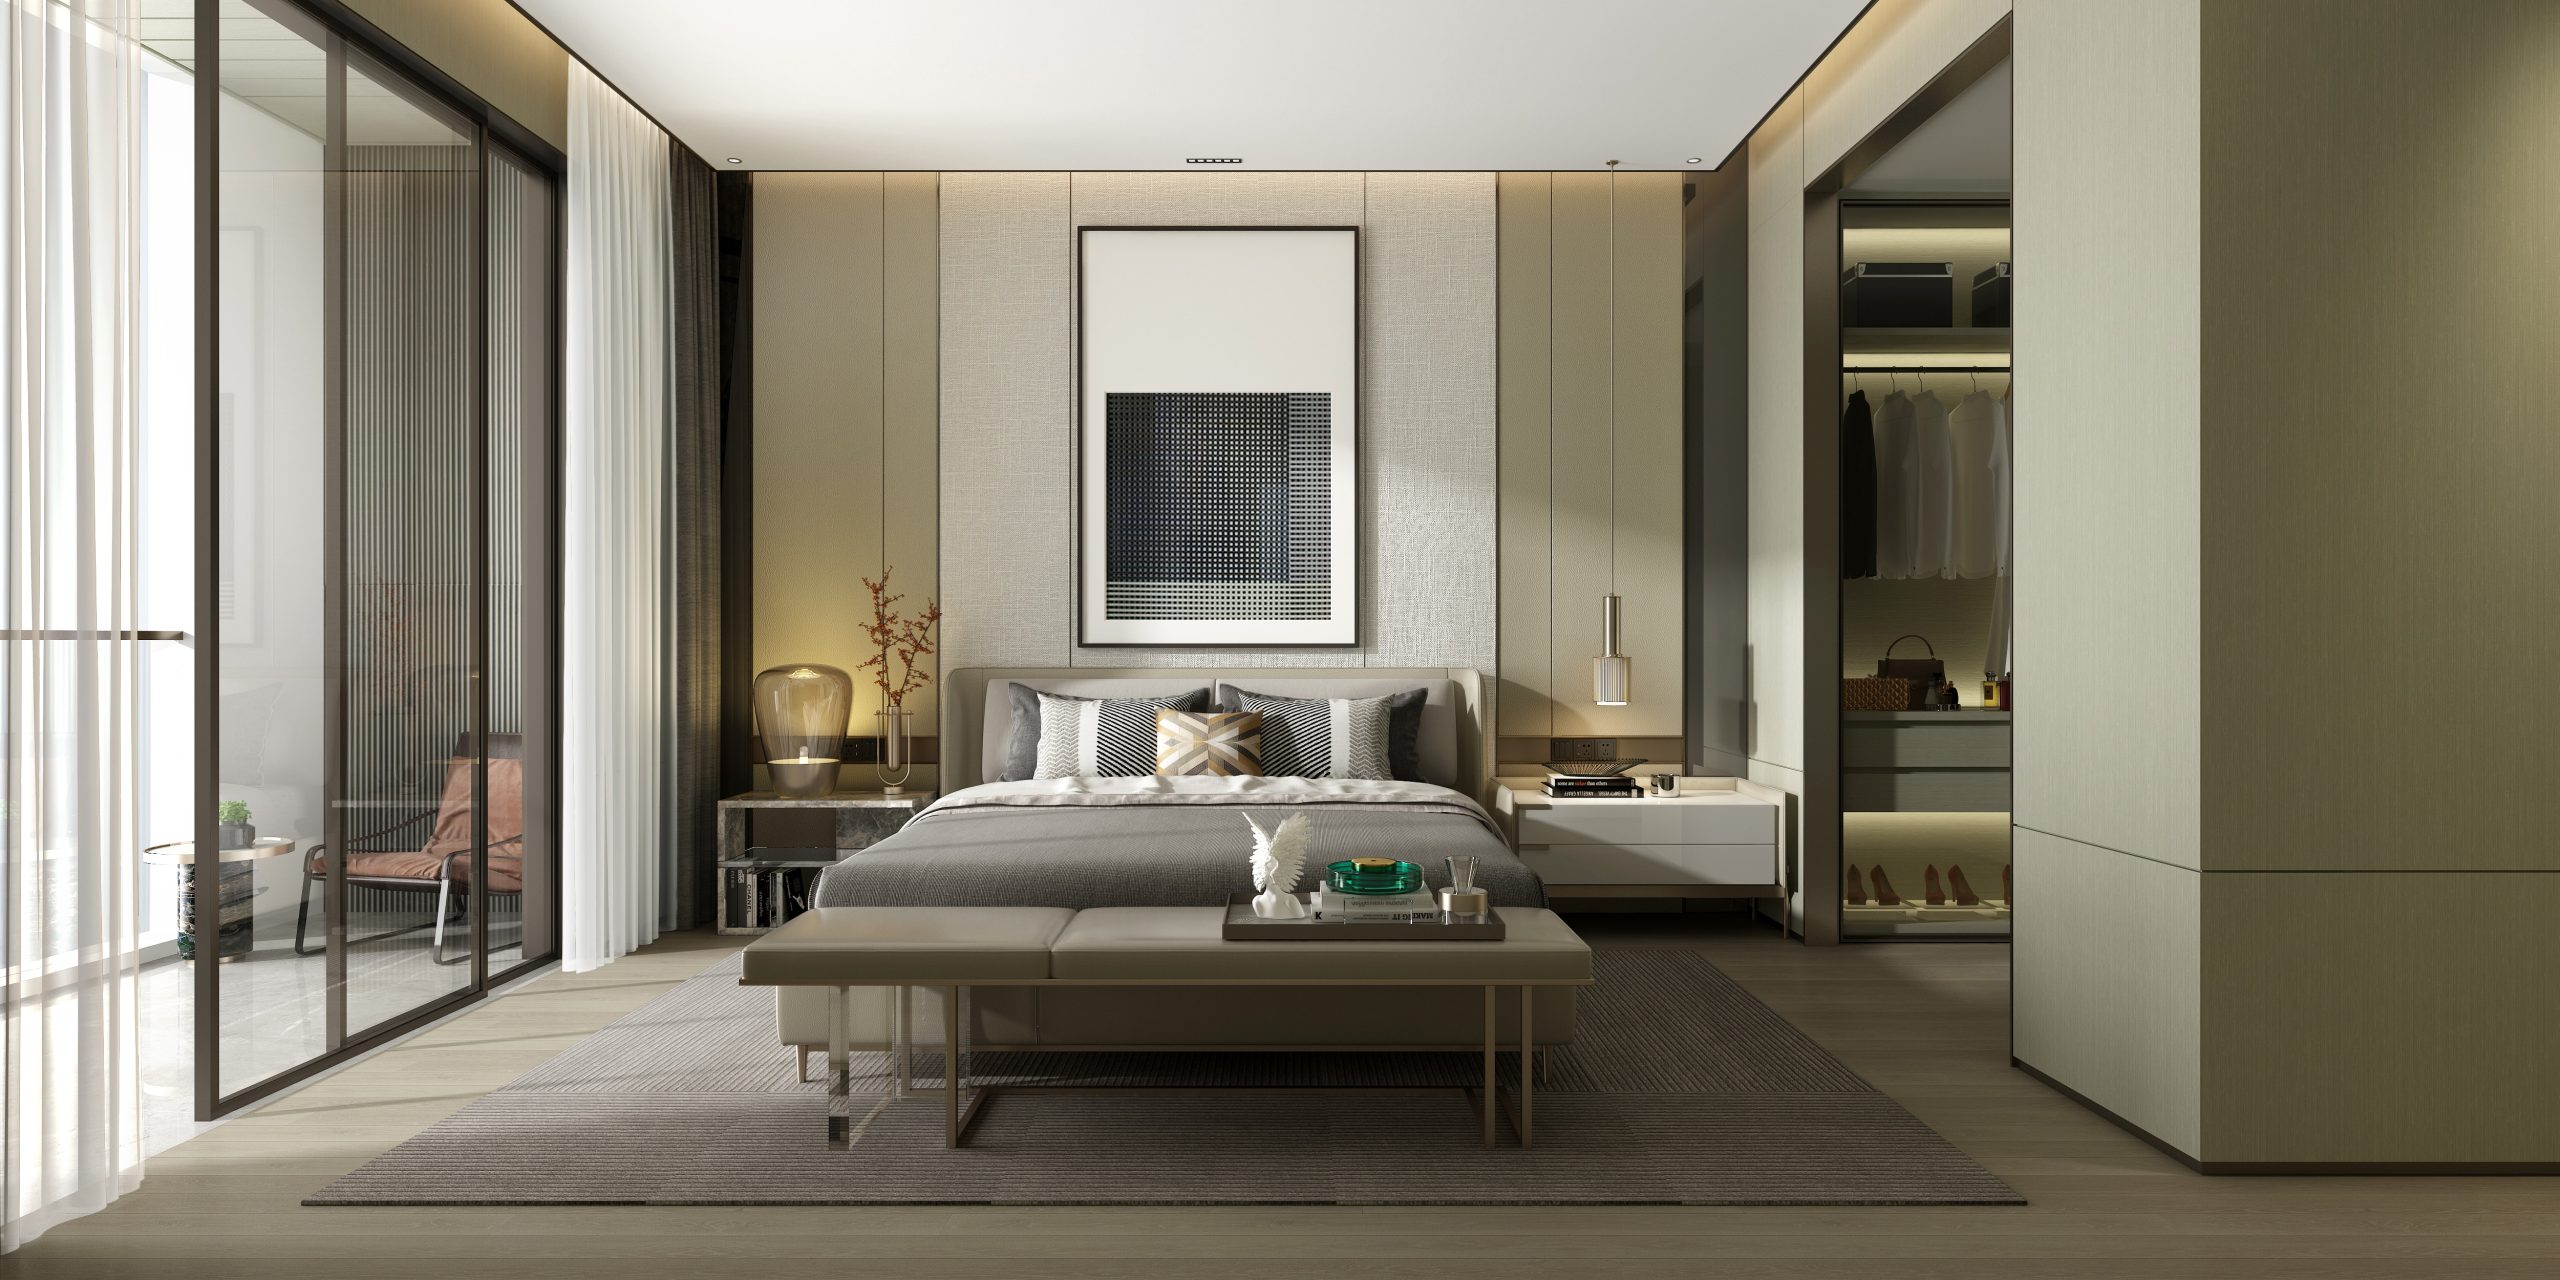 Neutral quiet luxury home with sliding doors